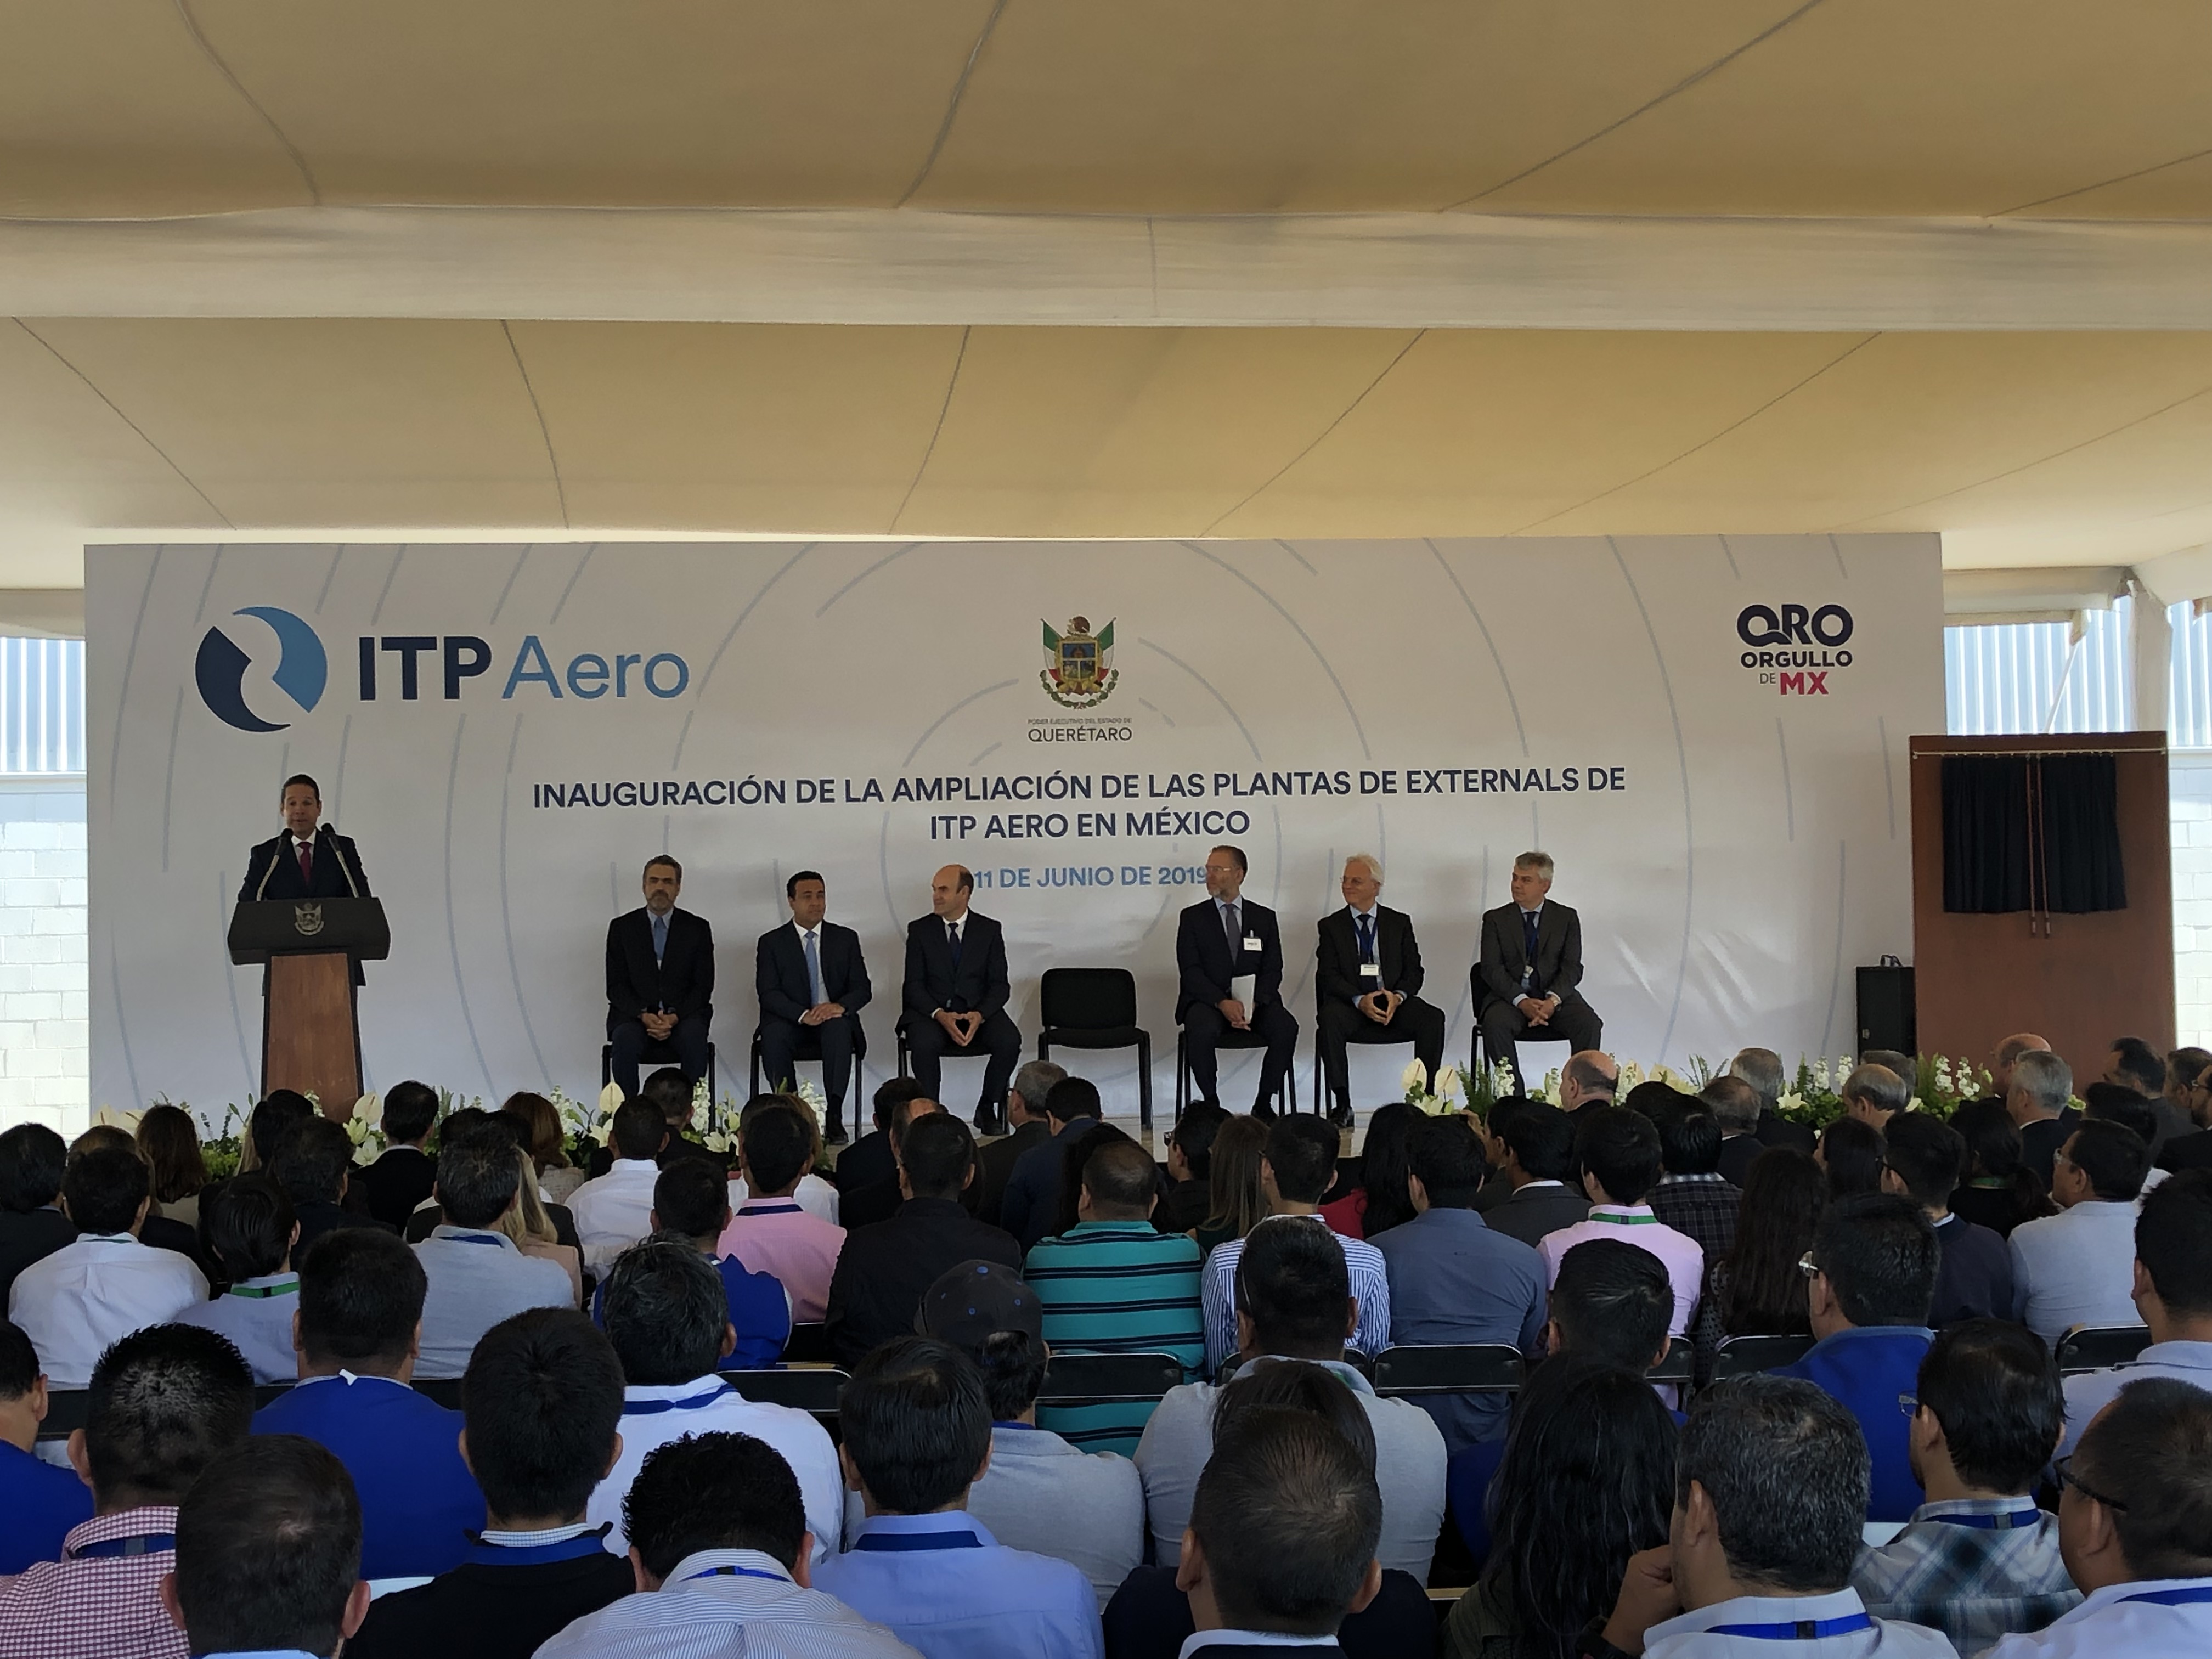  Suma Querétaro mil 100 nuevos empleos con ampliación de ITP Aero